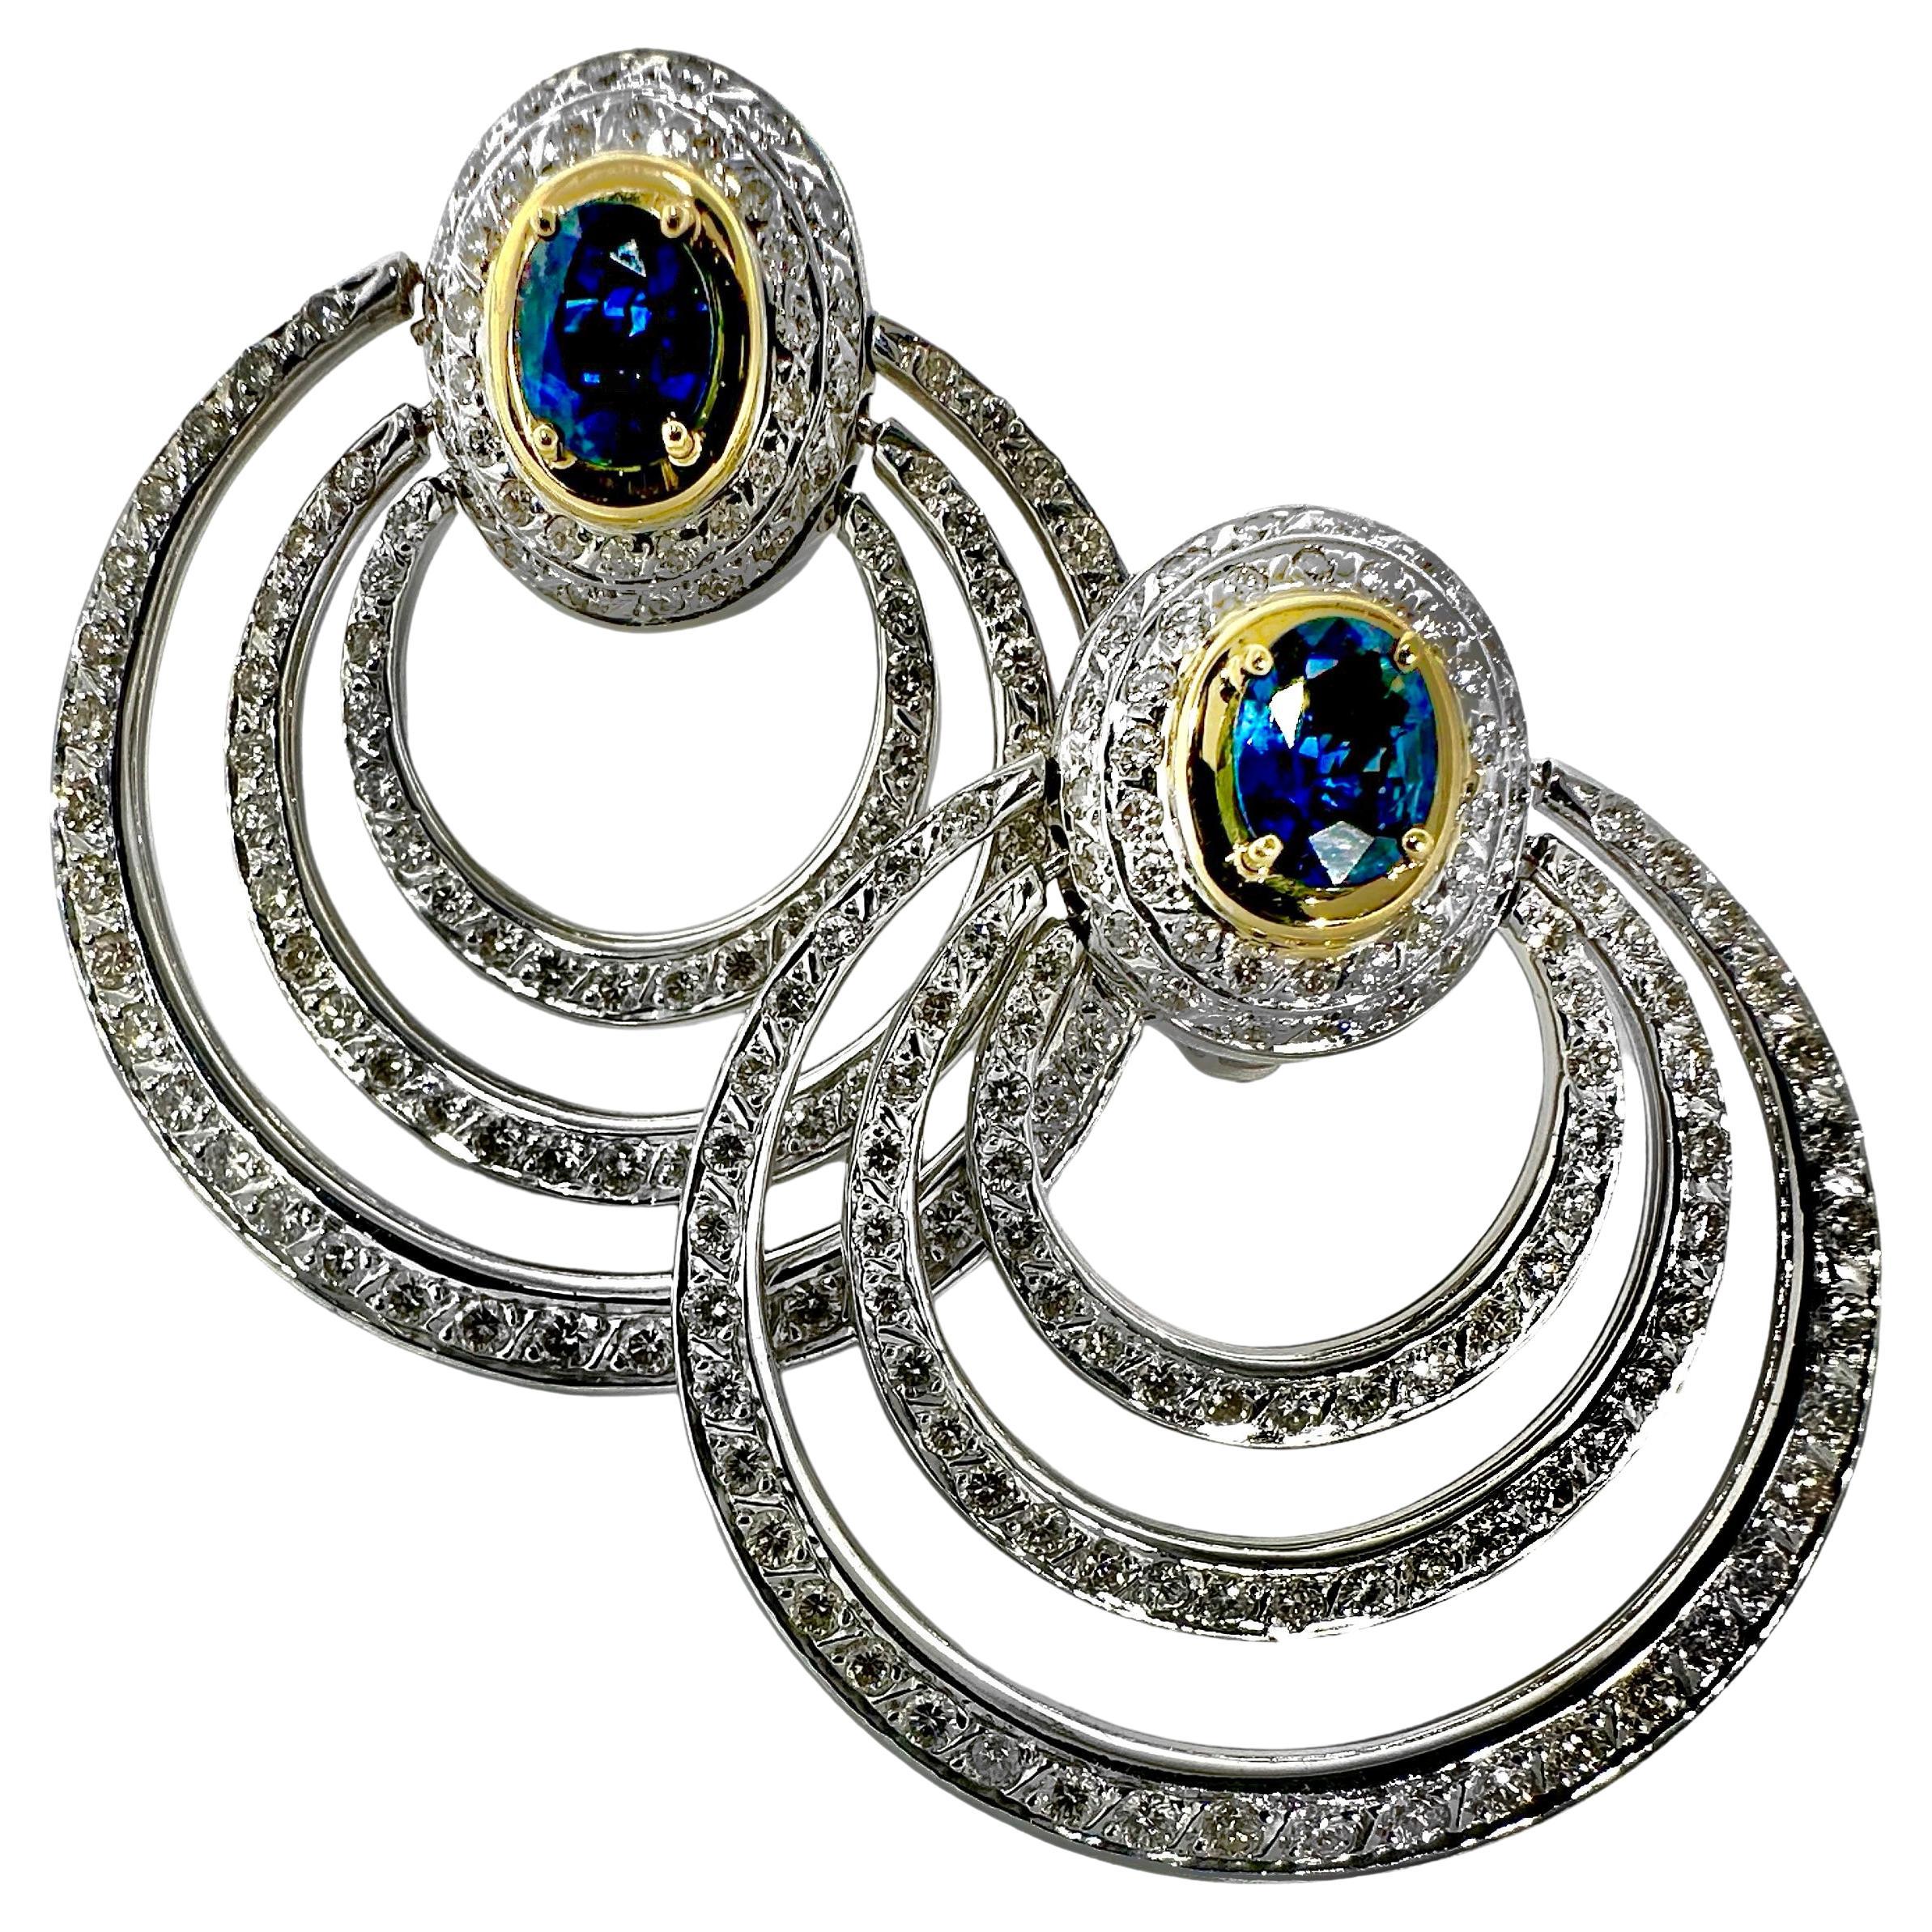 Dramatic 18k White & Yellow gold, Diamond & Sapphire Hoop Earrings by Repossi